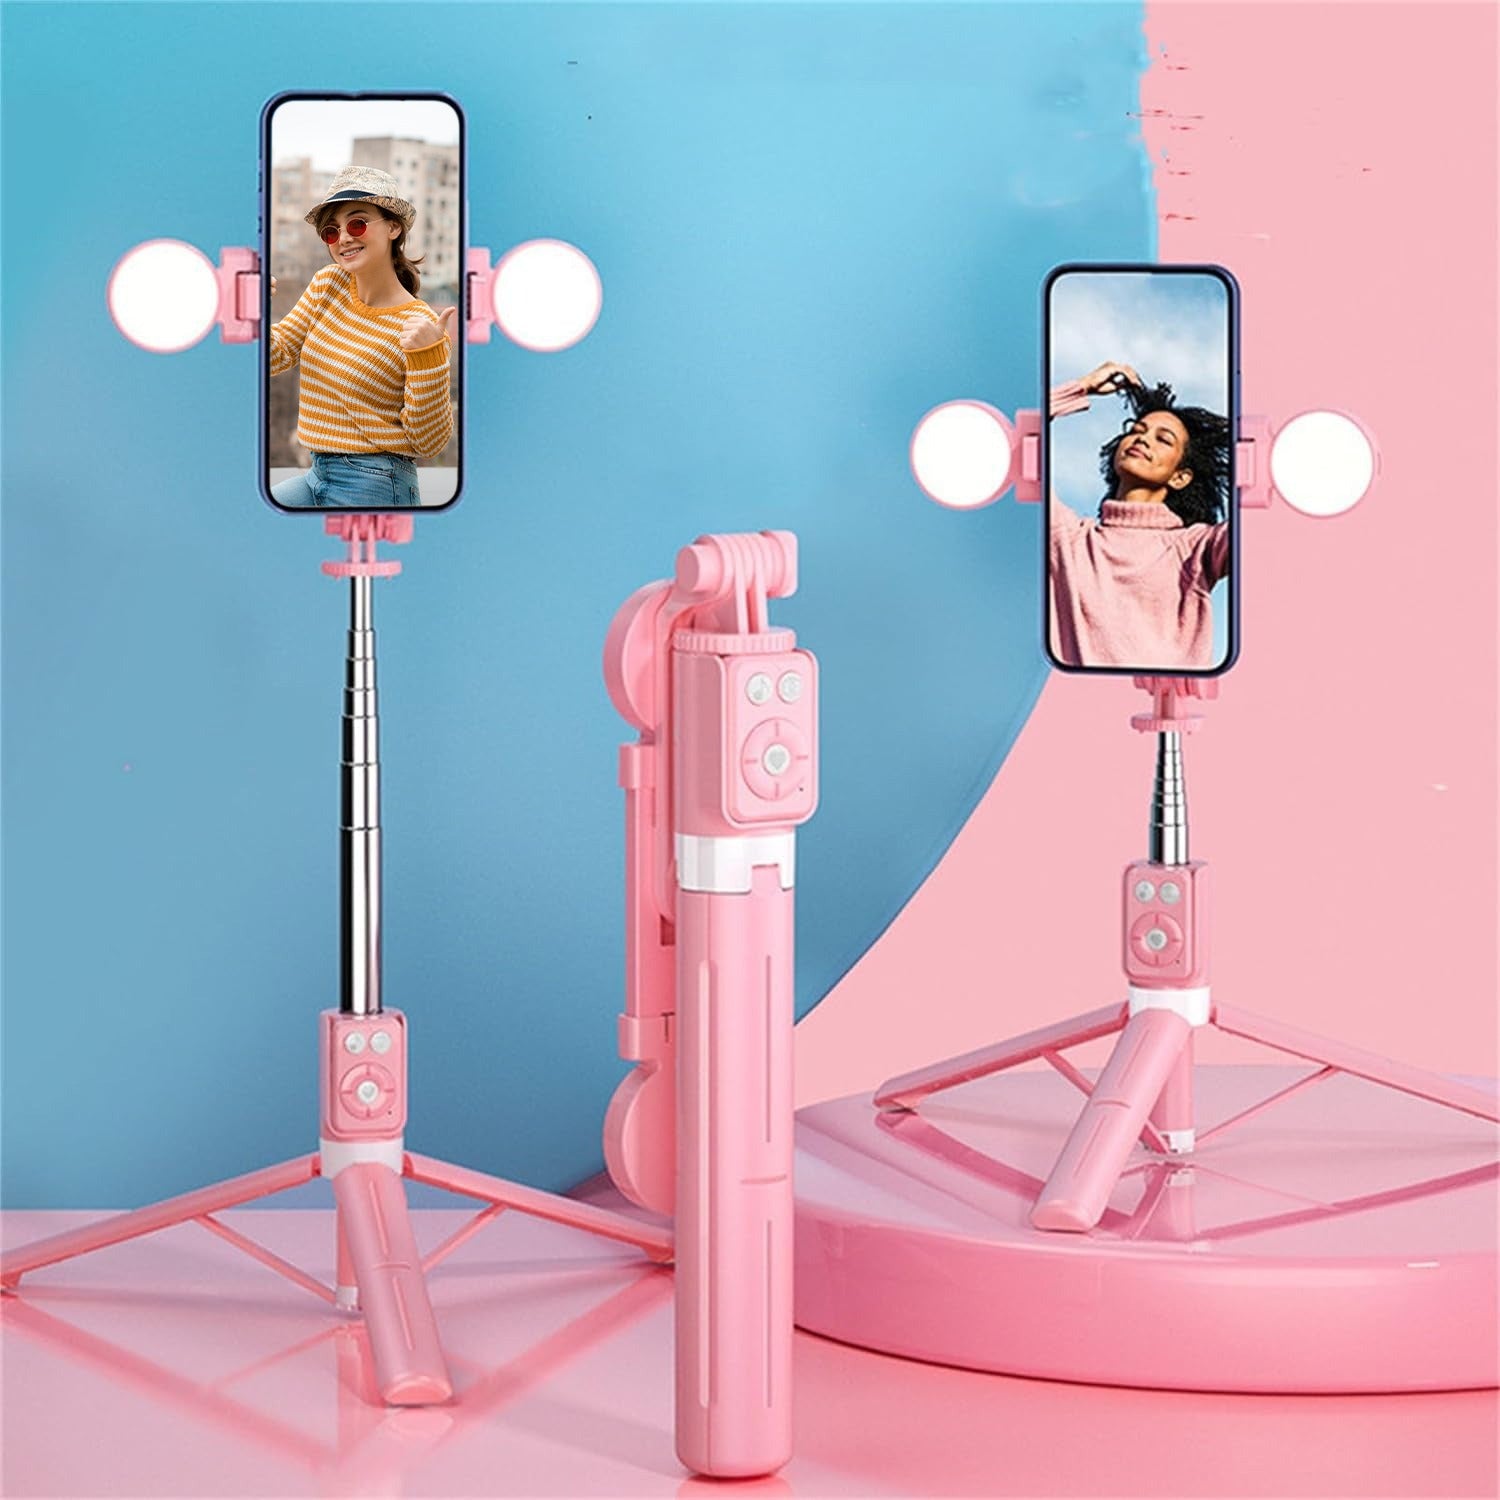 Pink Selfie Stick holding mobile phones.